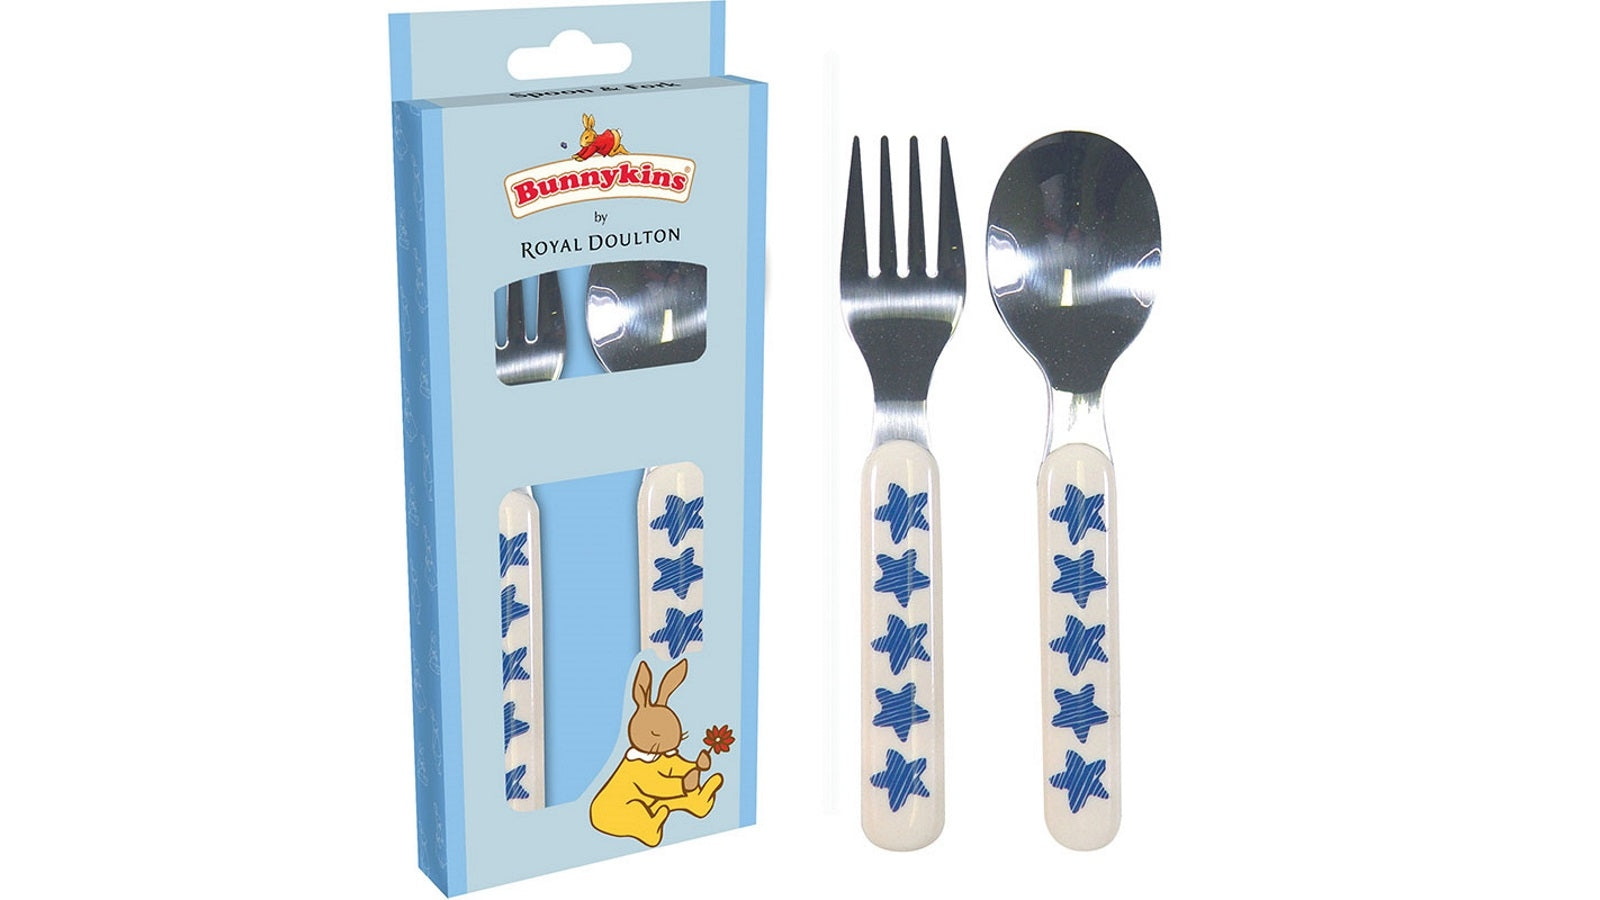 Bunnykins Shining Stars Spoon and Fork Set